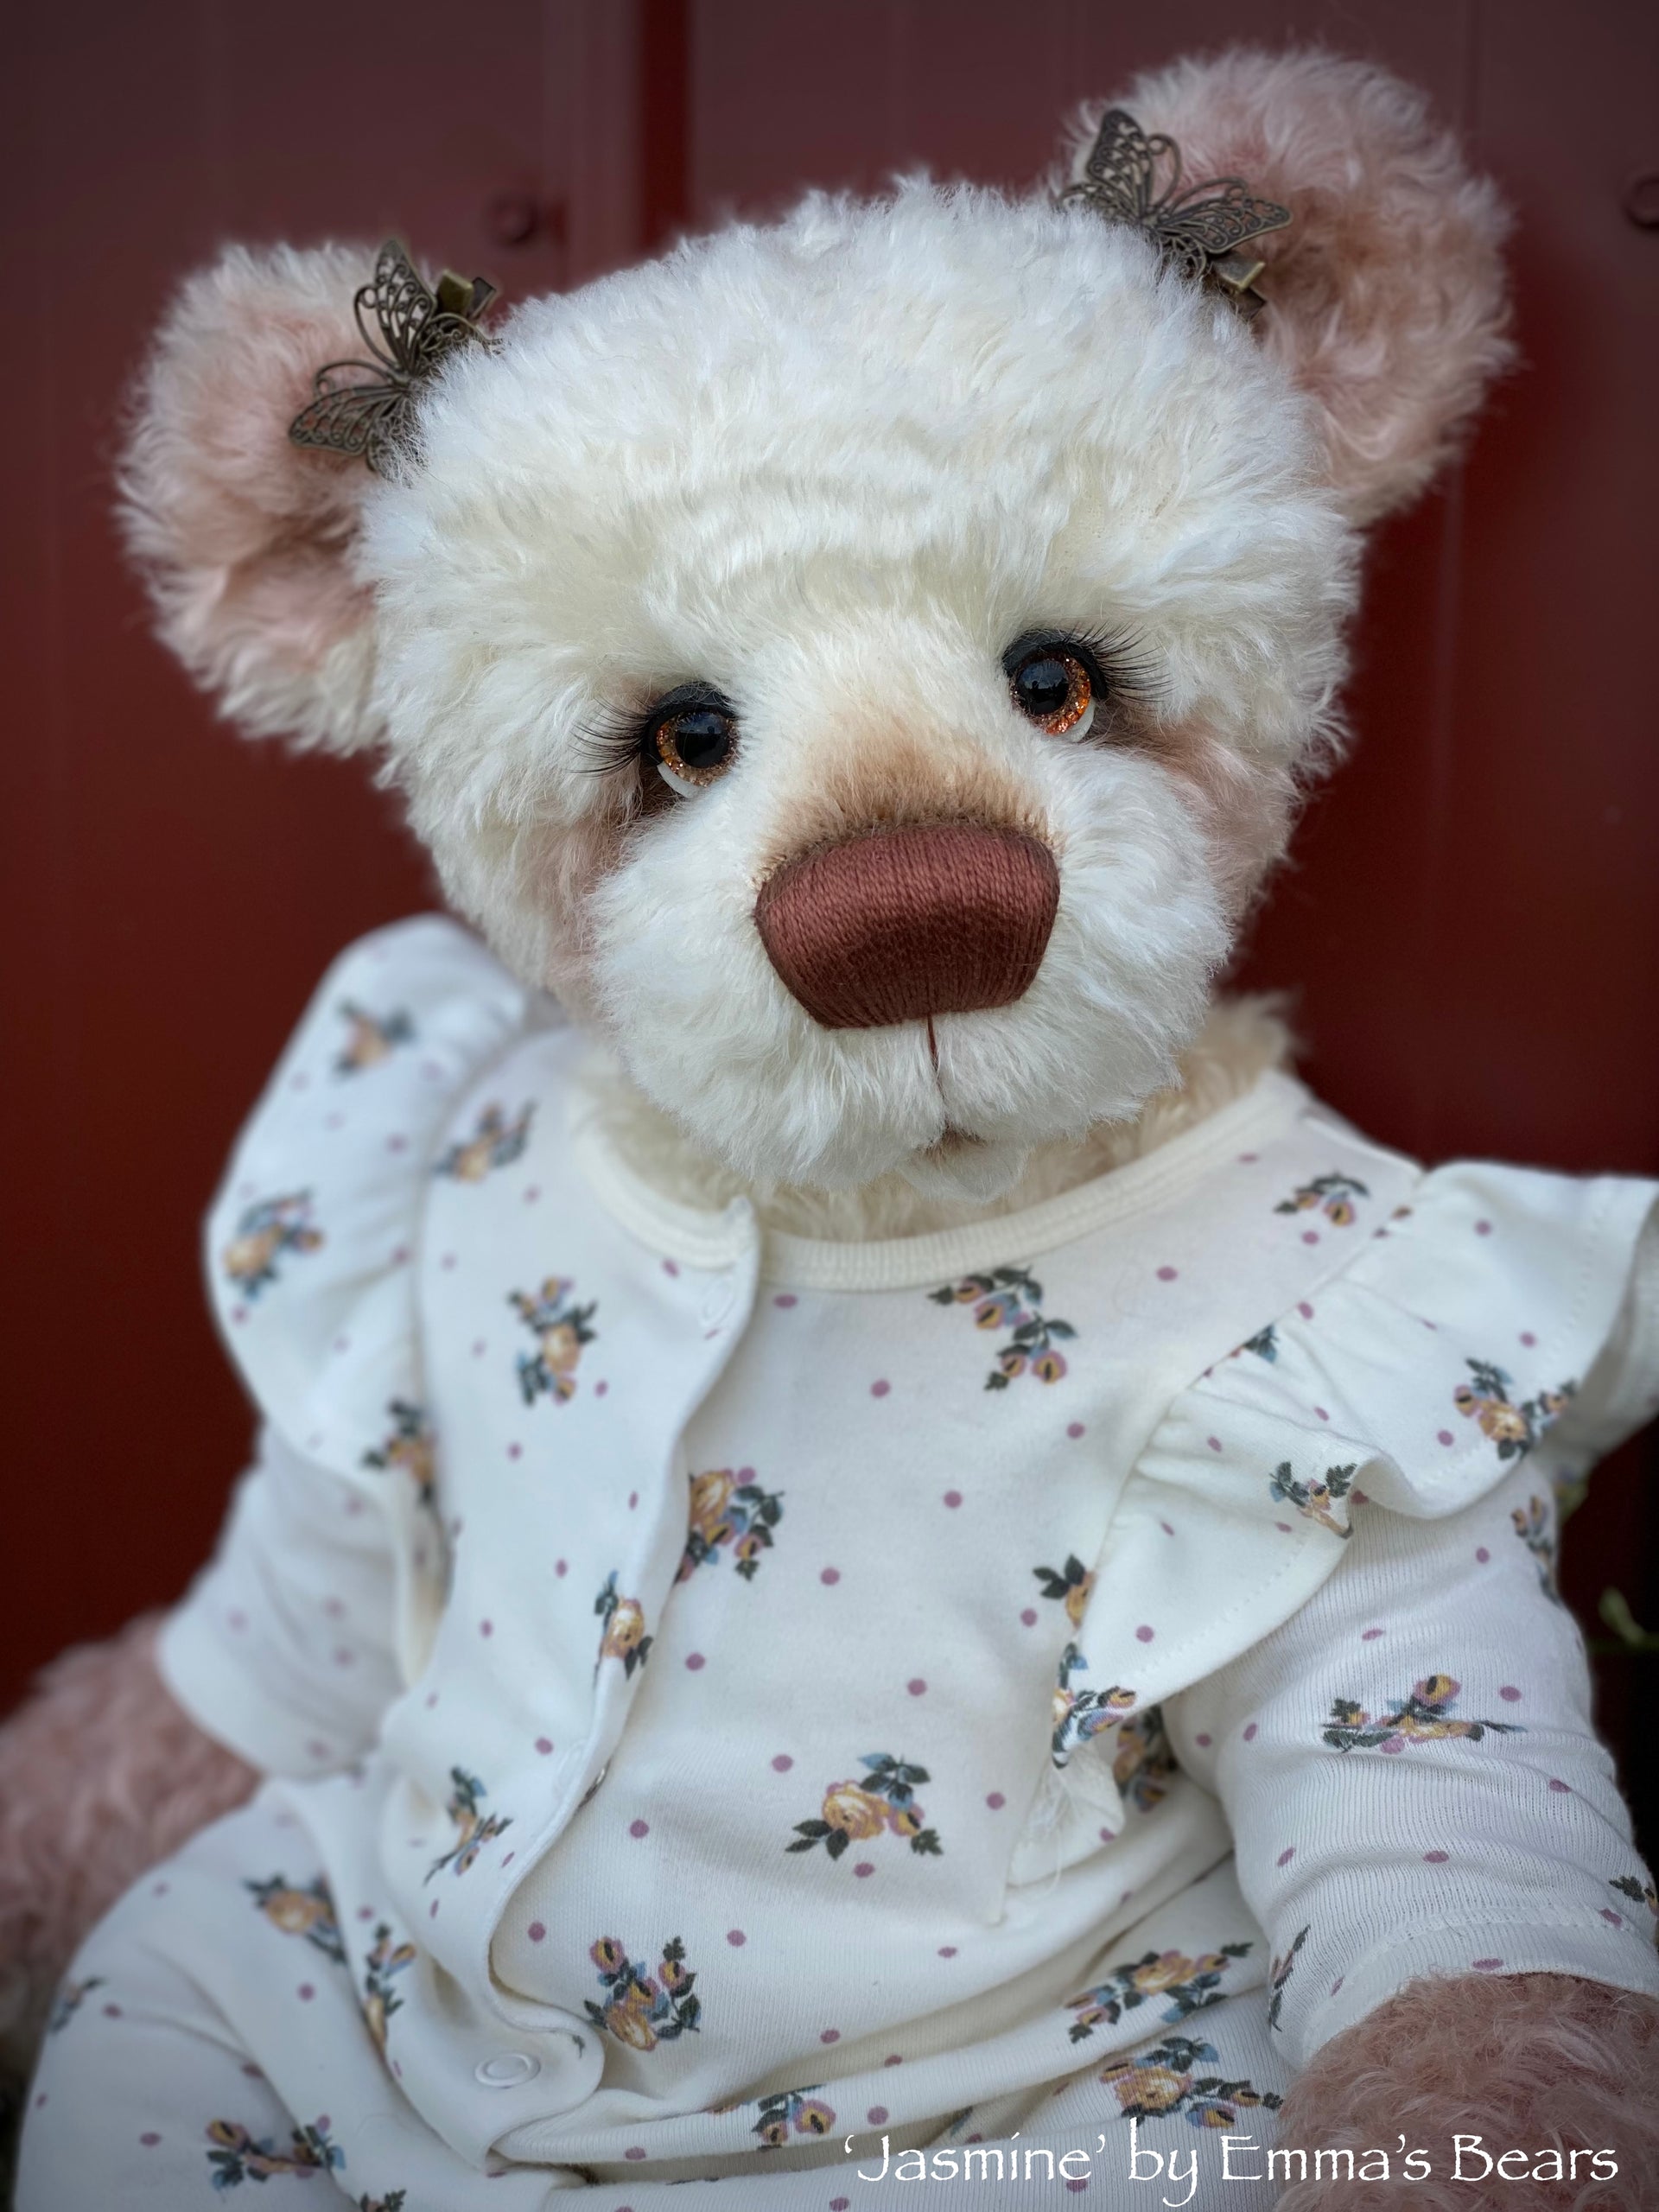 Jasmine - 21" Hand Dyed Mohair Toddler Artist Bear by Emma's Bears - OOAK